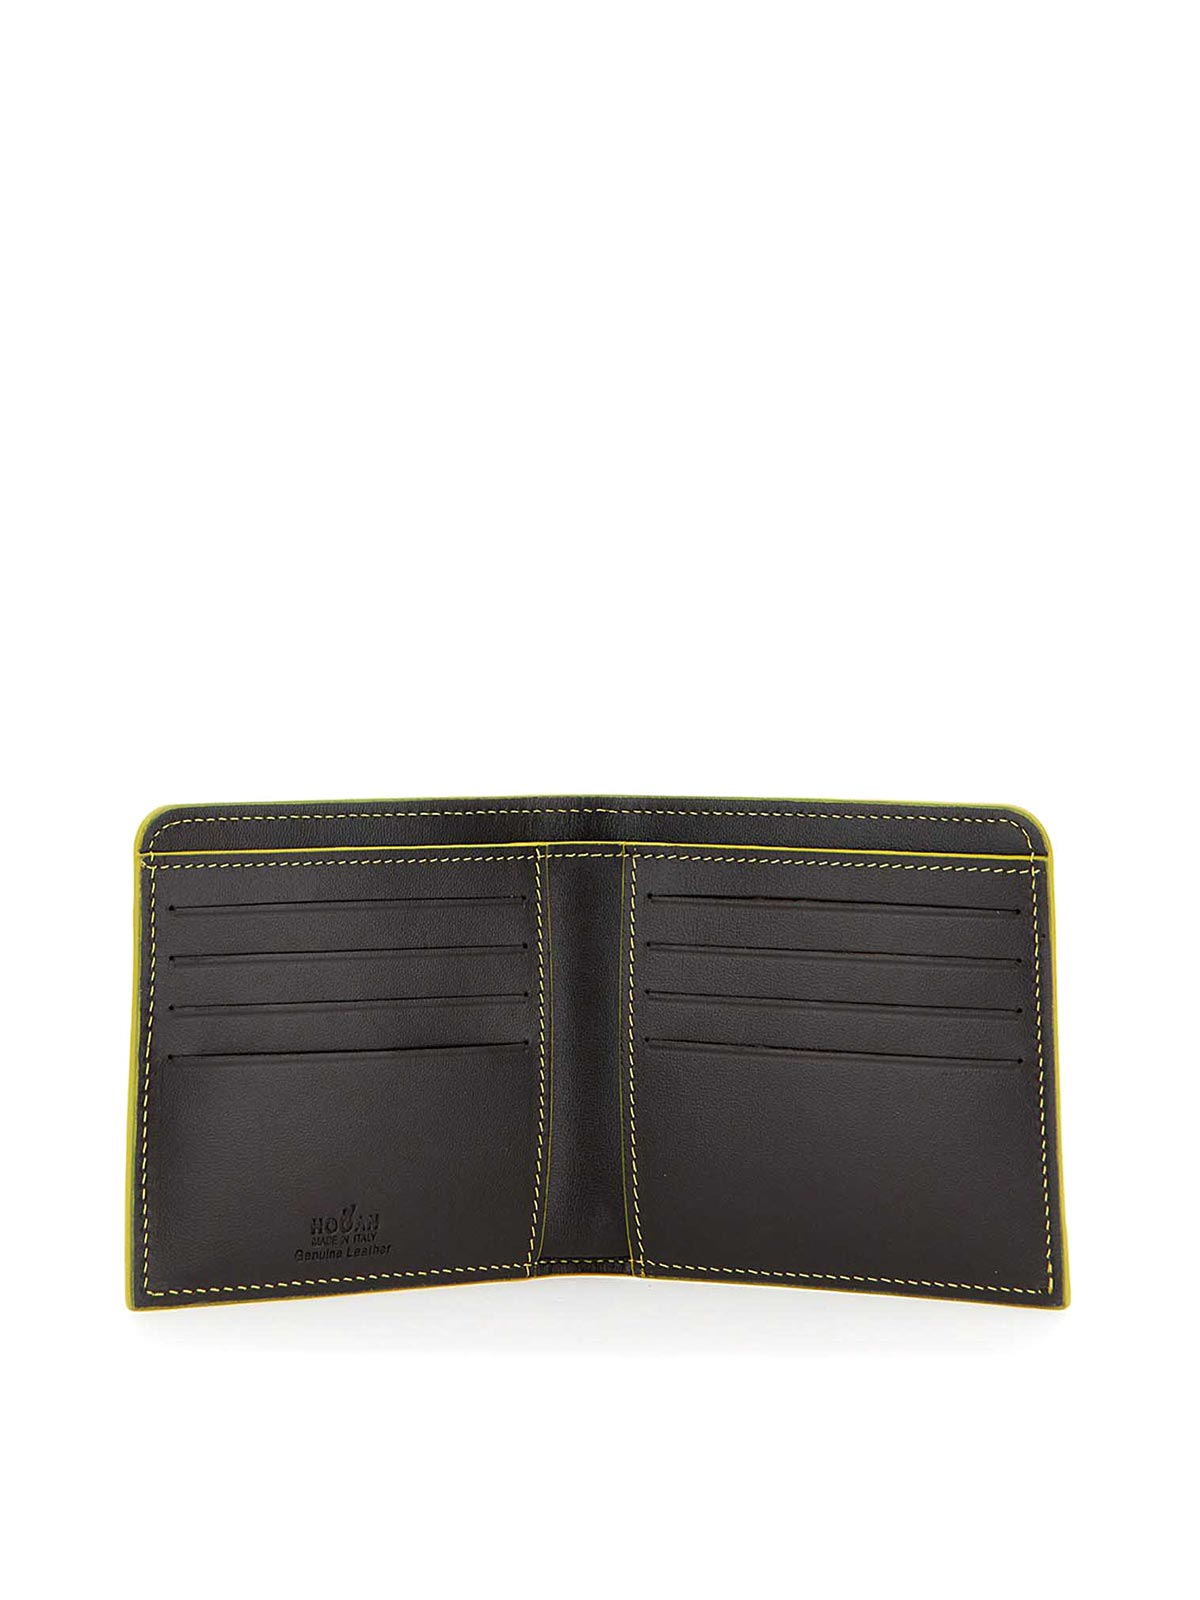 Shop Hogan Brown Leather Wallet